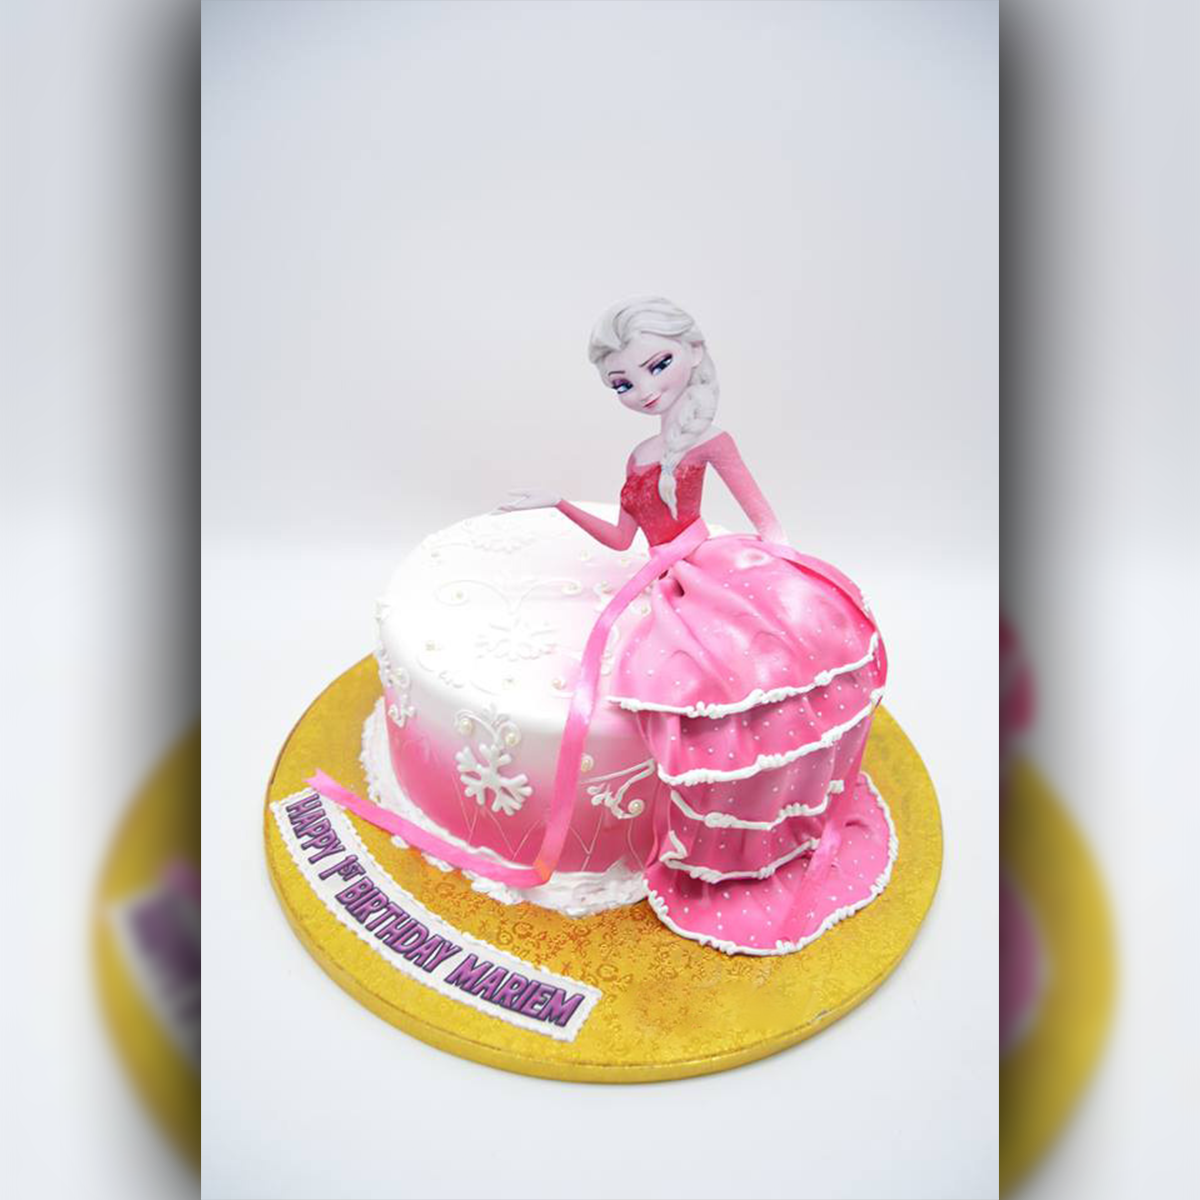 Elsa & Anna Cake - Madras Bakery